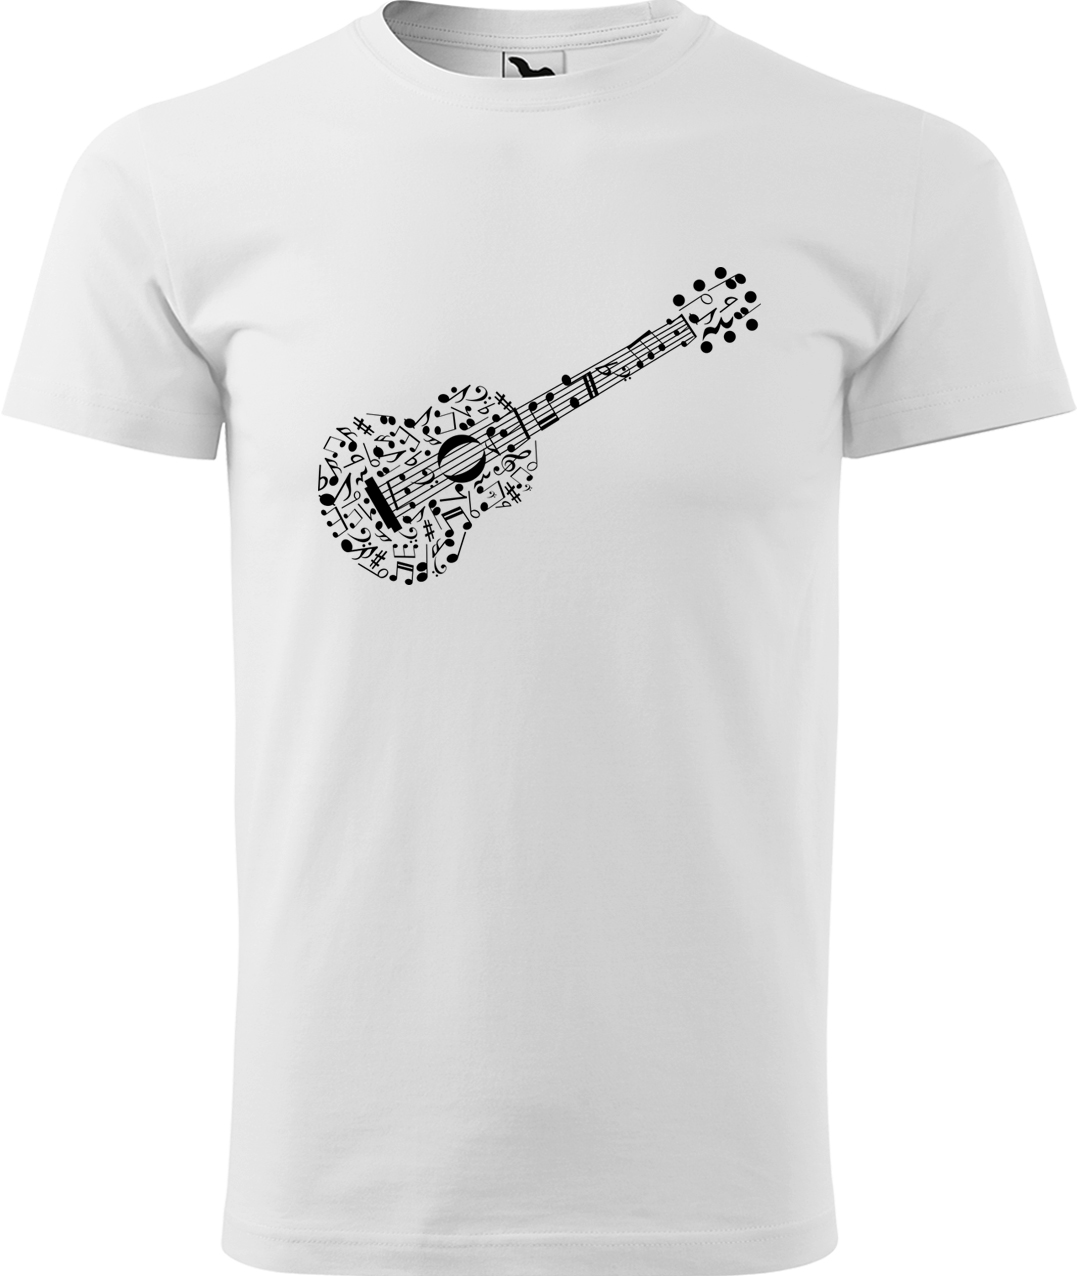 Pánské tričko s kytarou - Kytara z not Velikost: L, Barva: Bílá (00), Střih: pánský